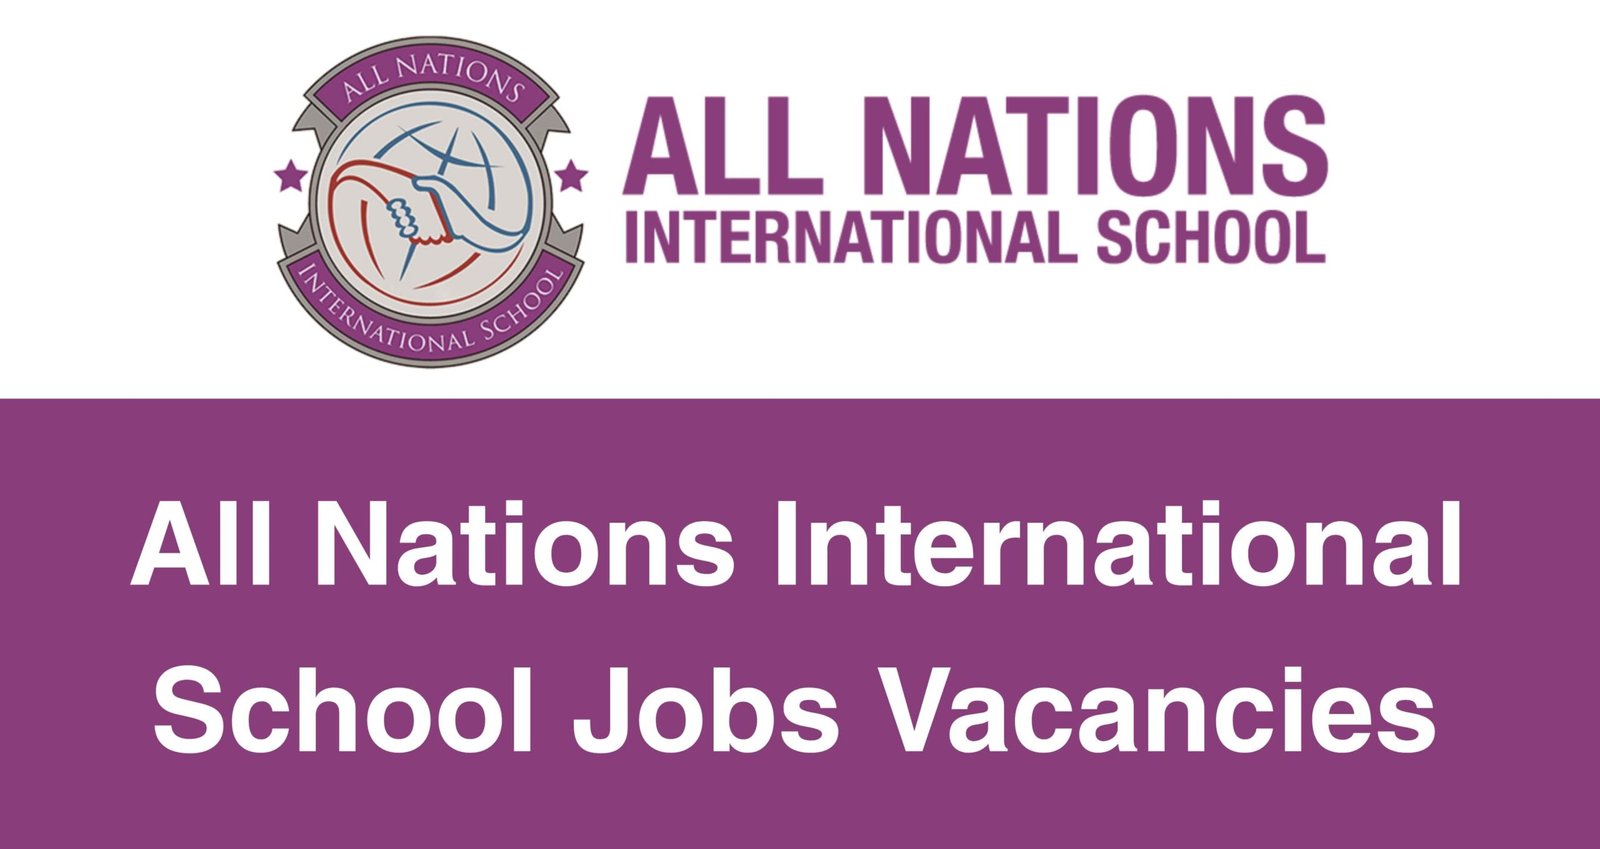 All Nations International School Jobs Vacancies